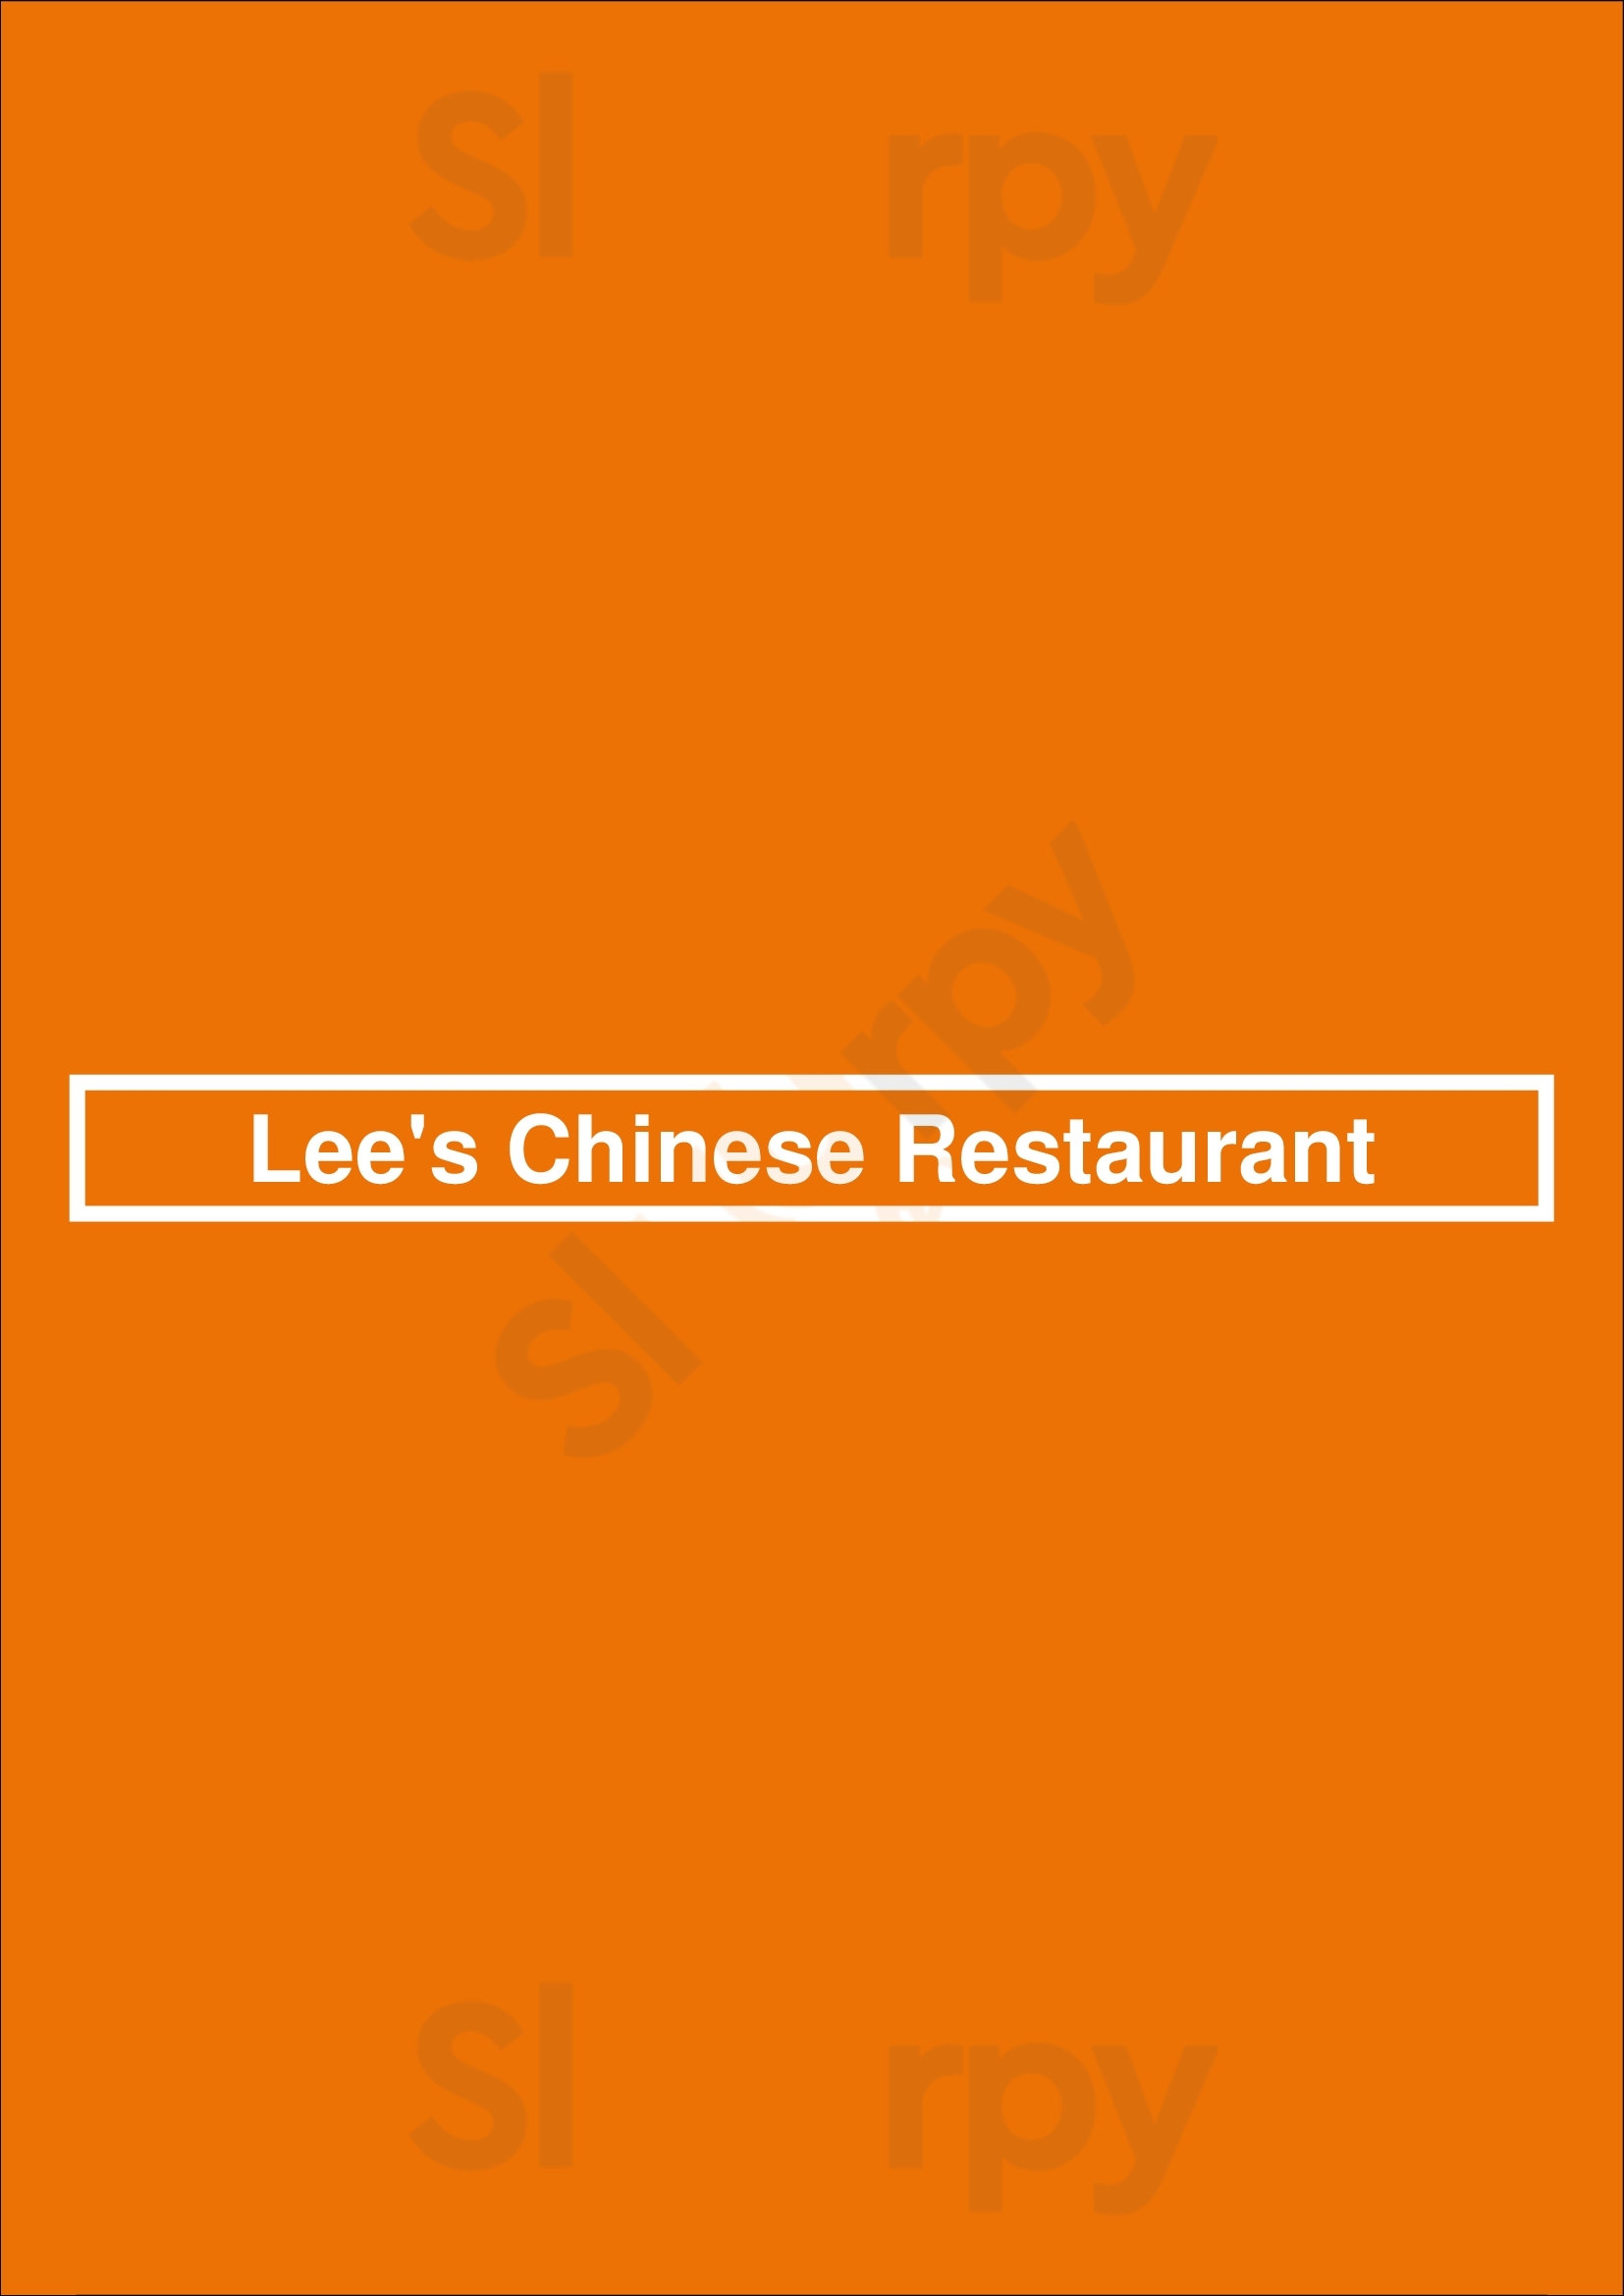 Lee's Chinese Restaurant Sacramento Menu - 1